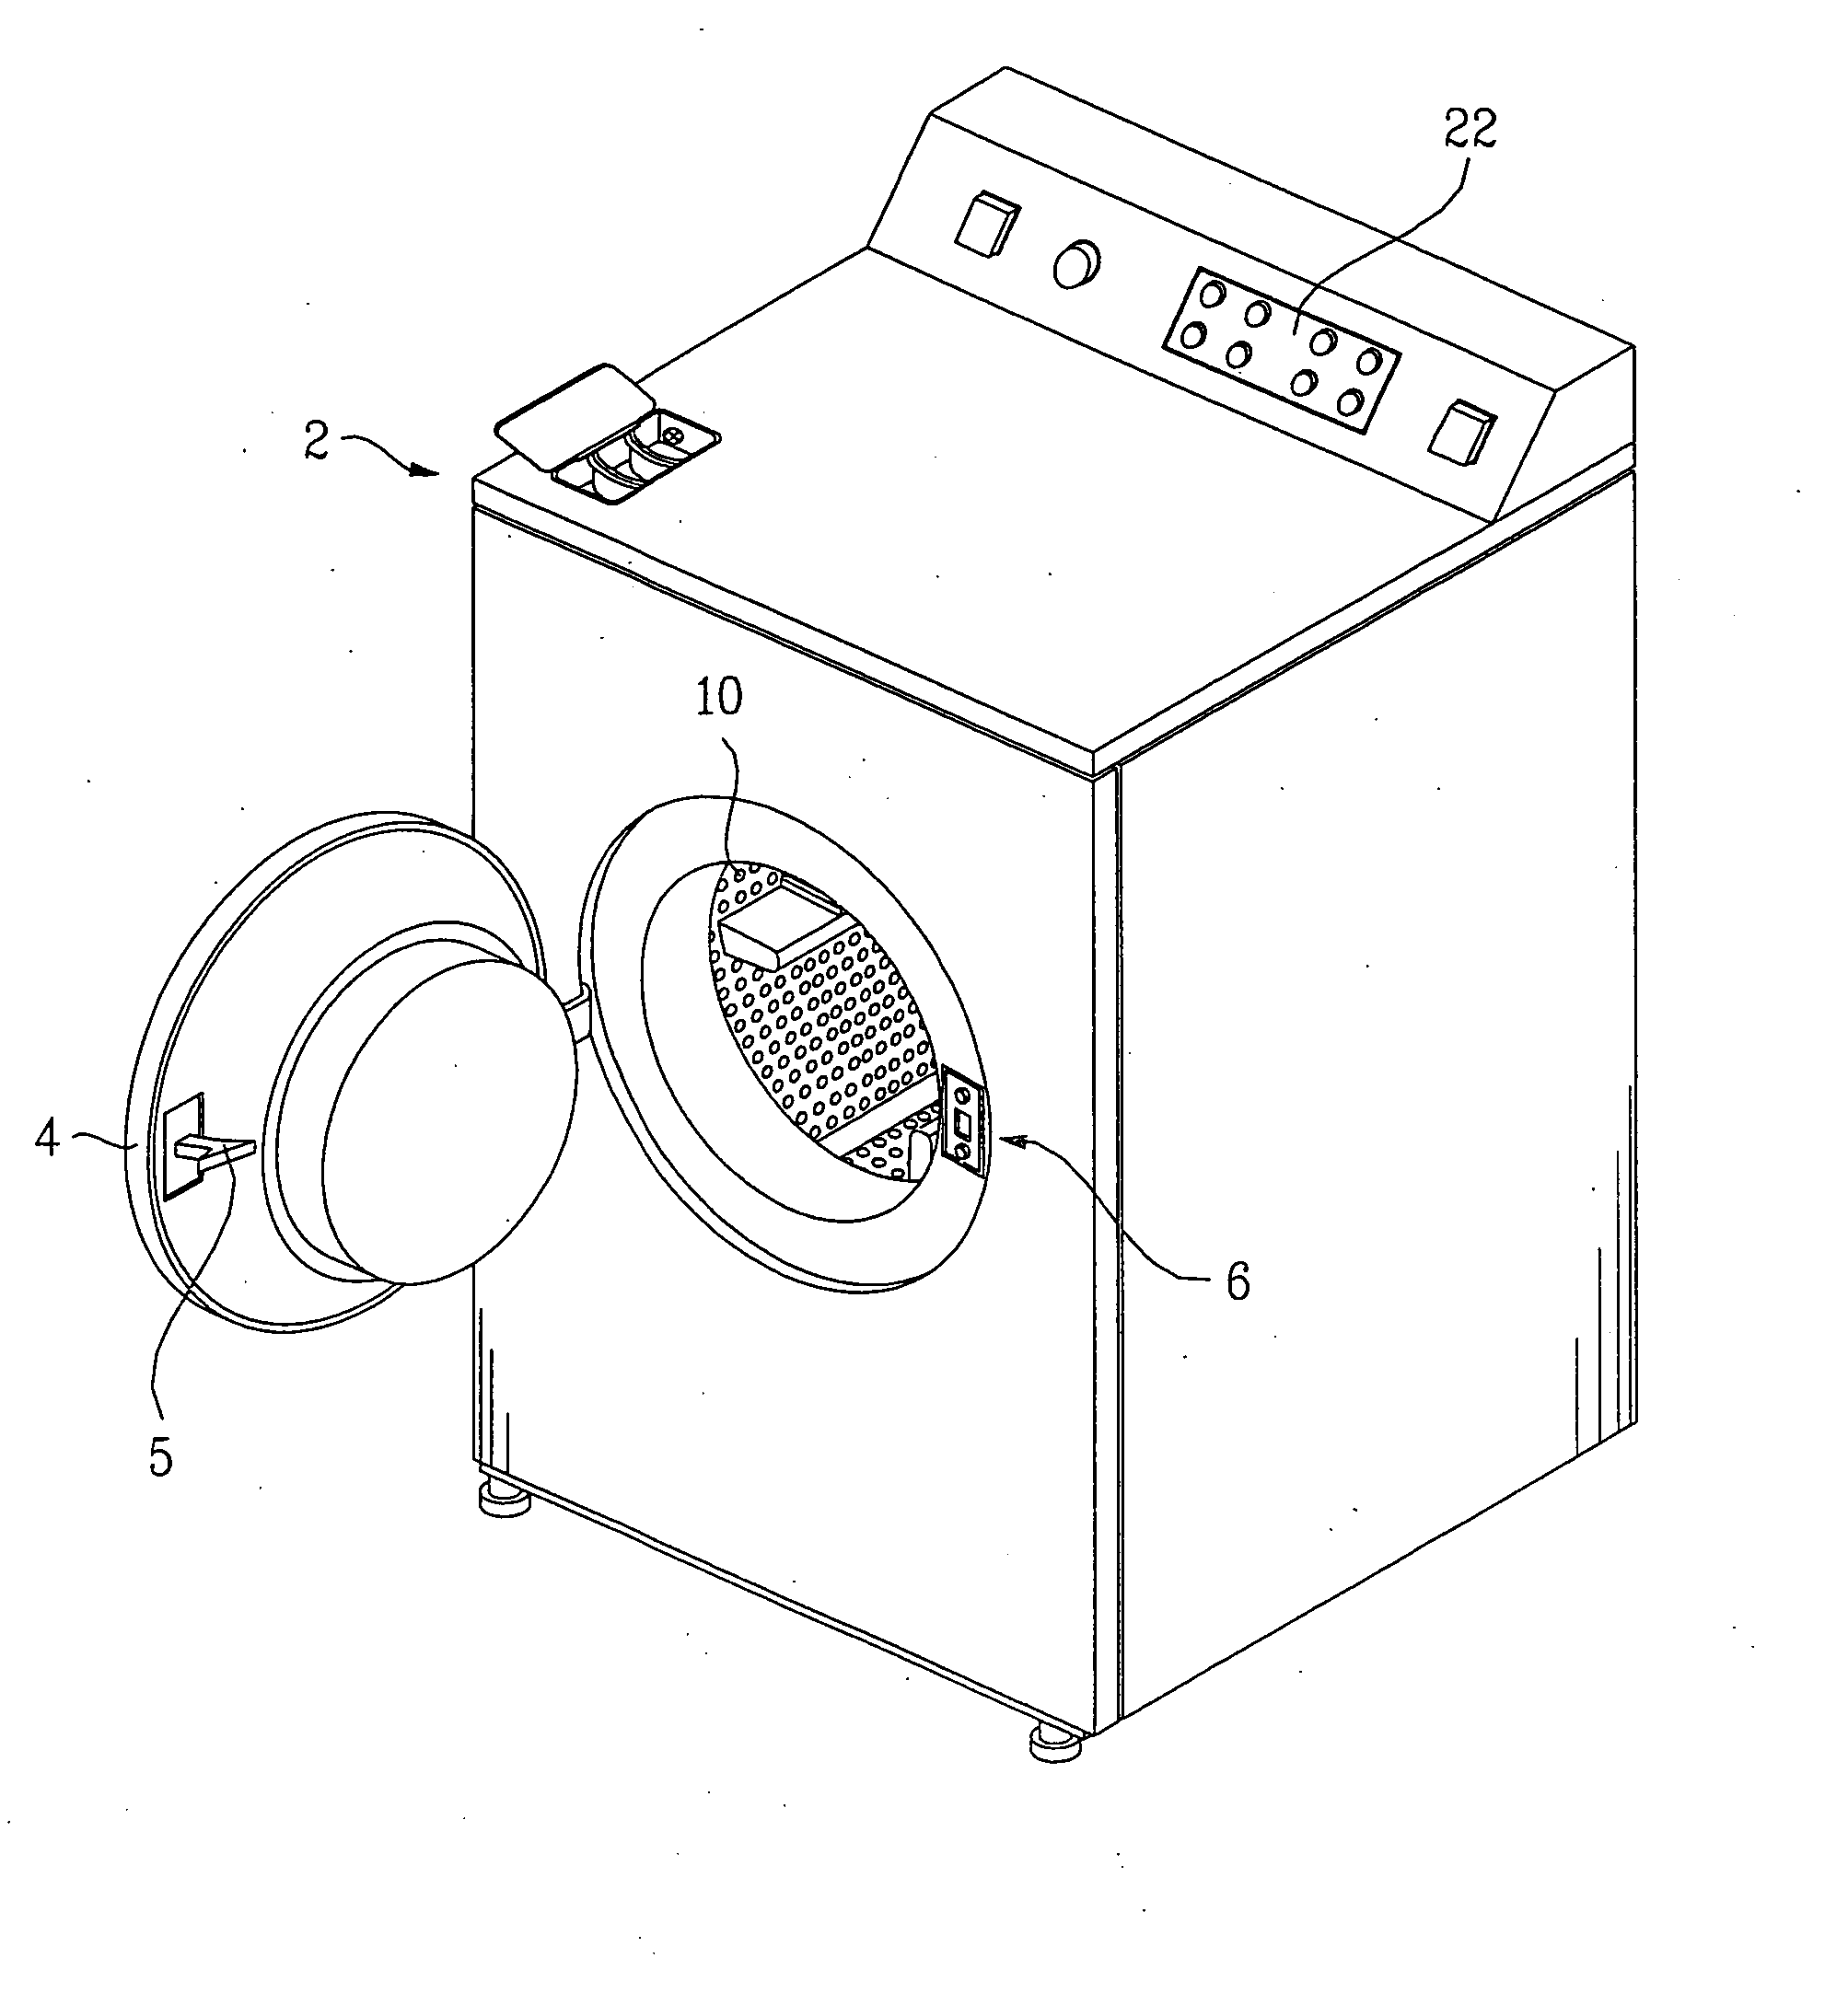 Door Locking Wwitch of Washing Machine and Method Thereof